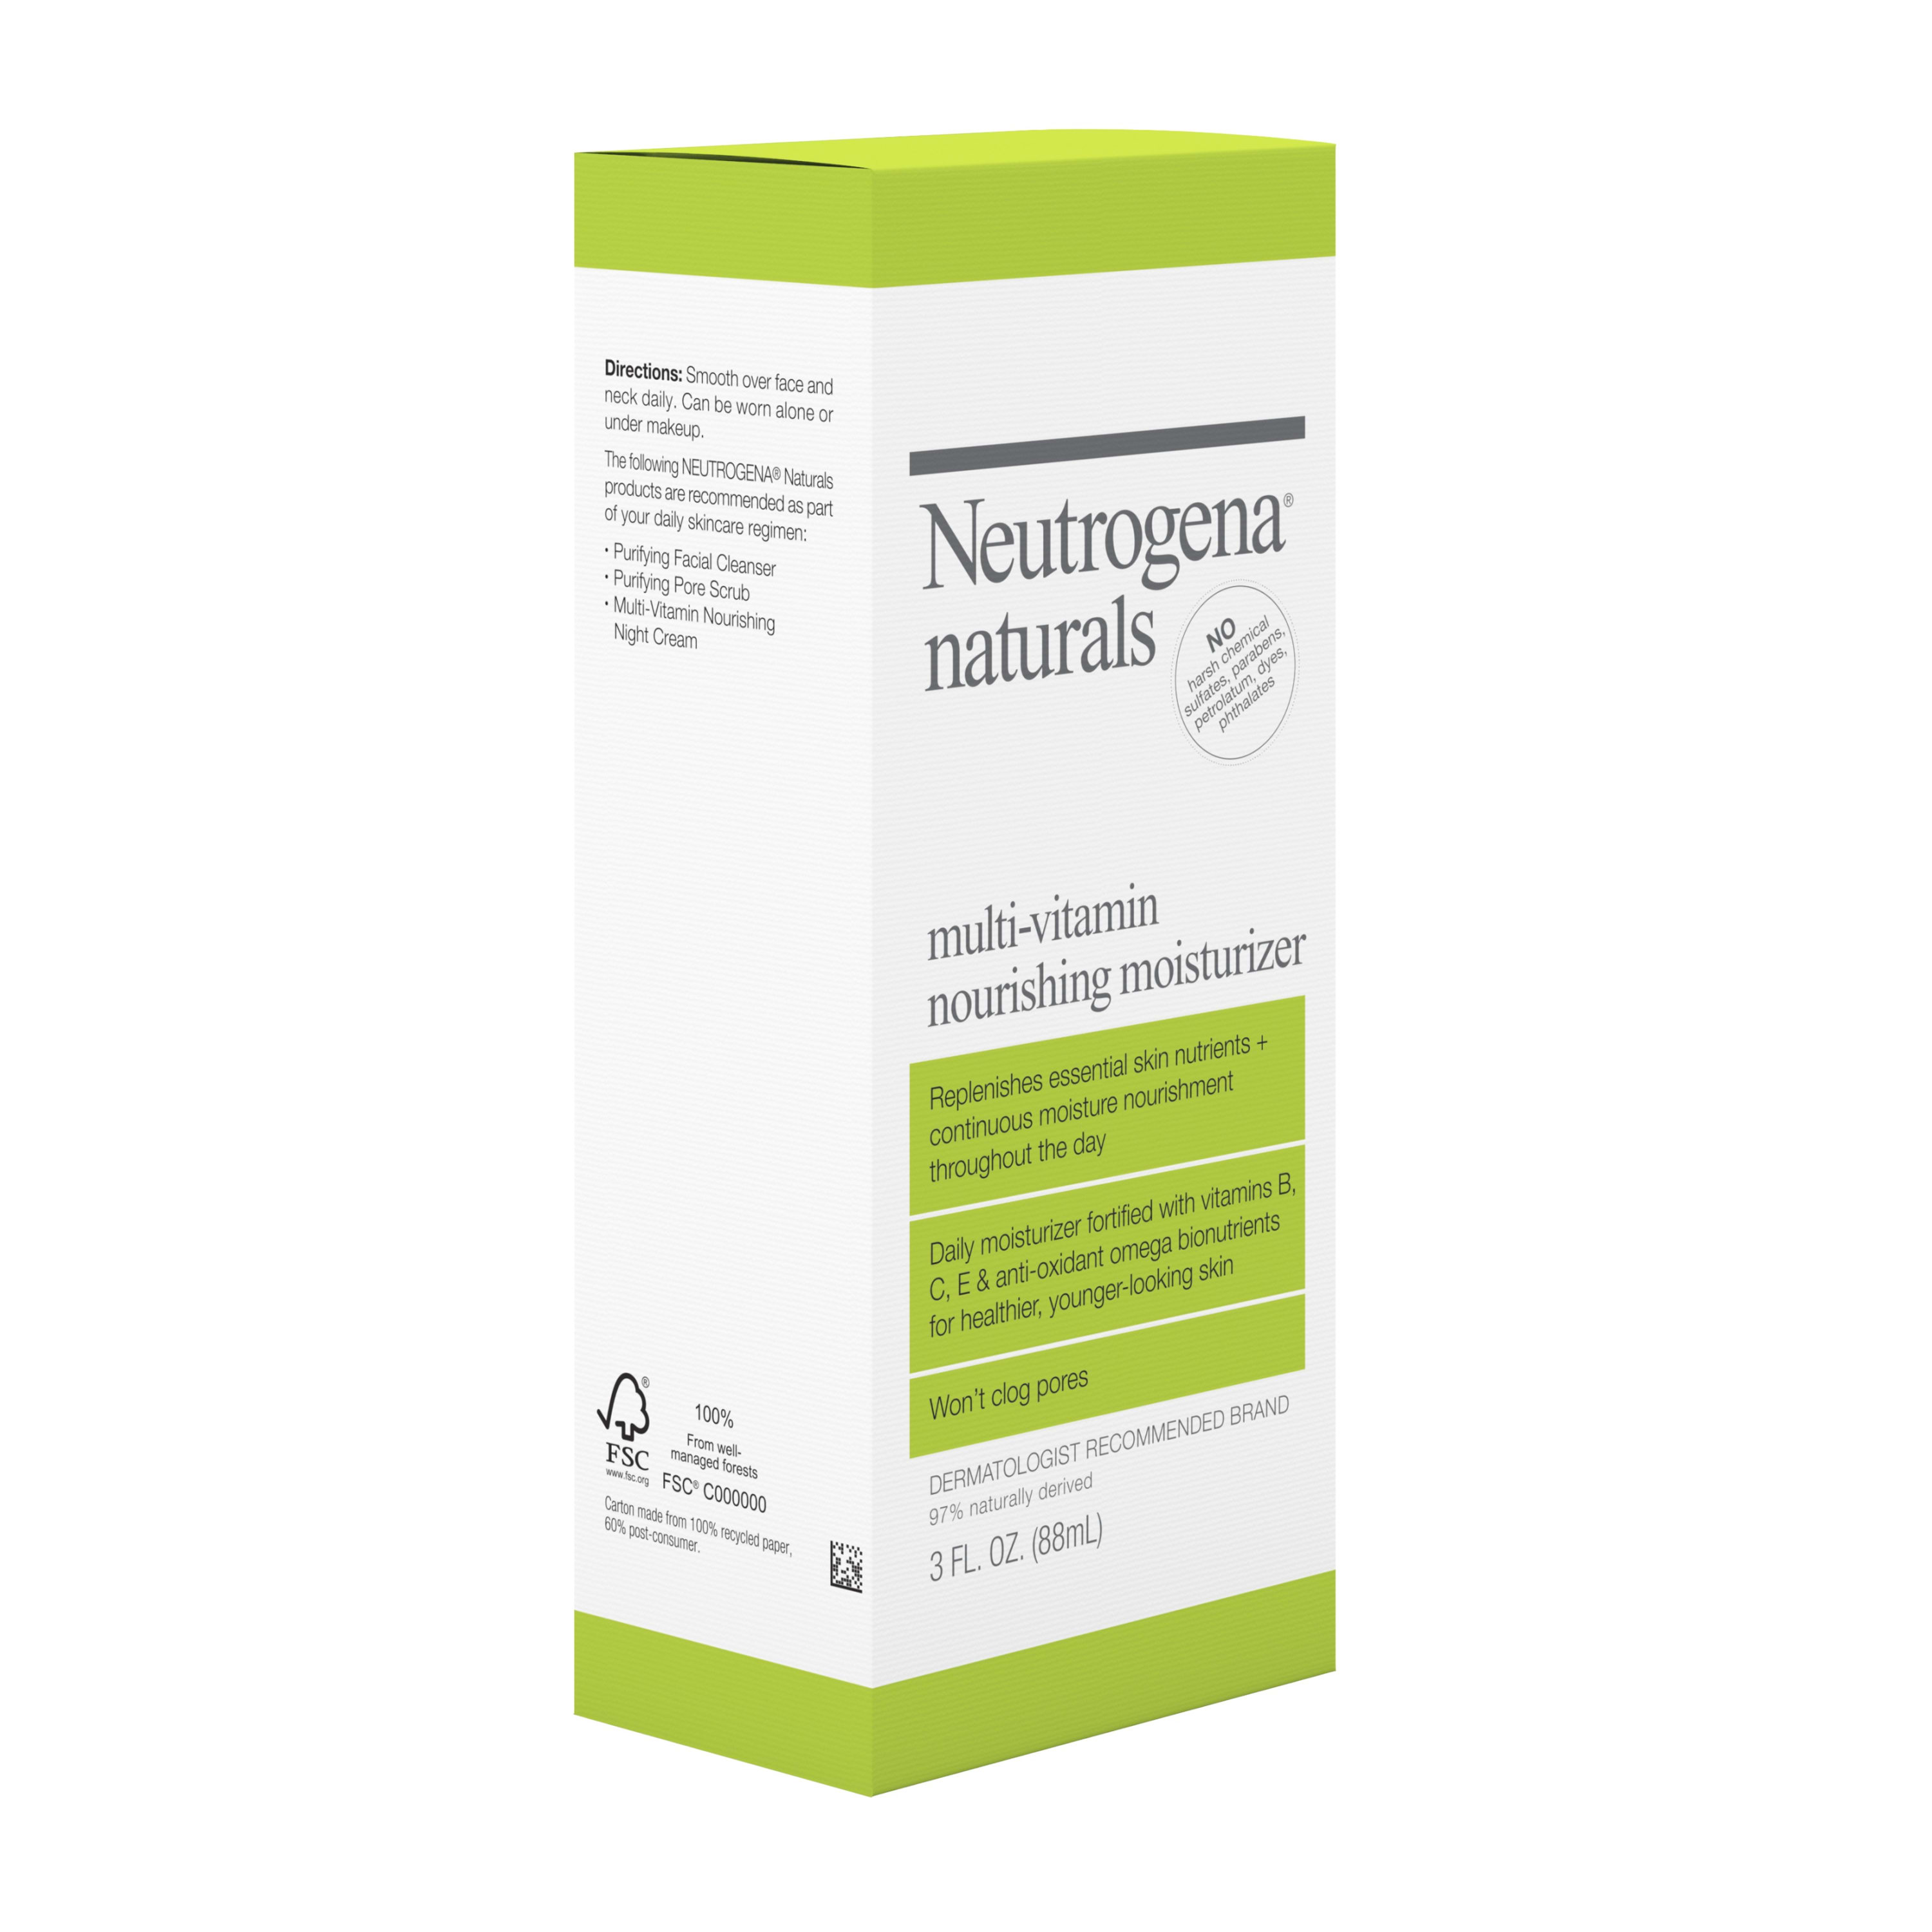 Neutrogena Naturals Multi-Vitamin Nourishing Daily Face Moisturizer, 3 fl oz - image 5 of 9